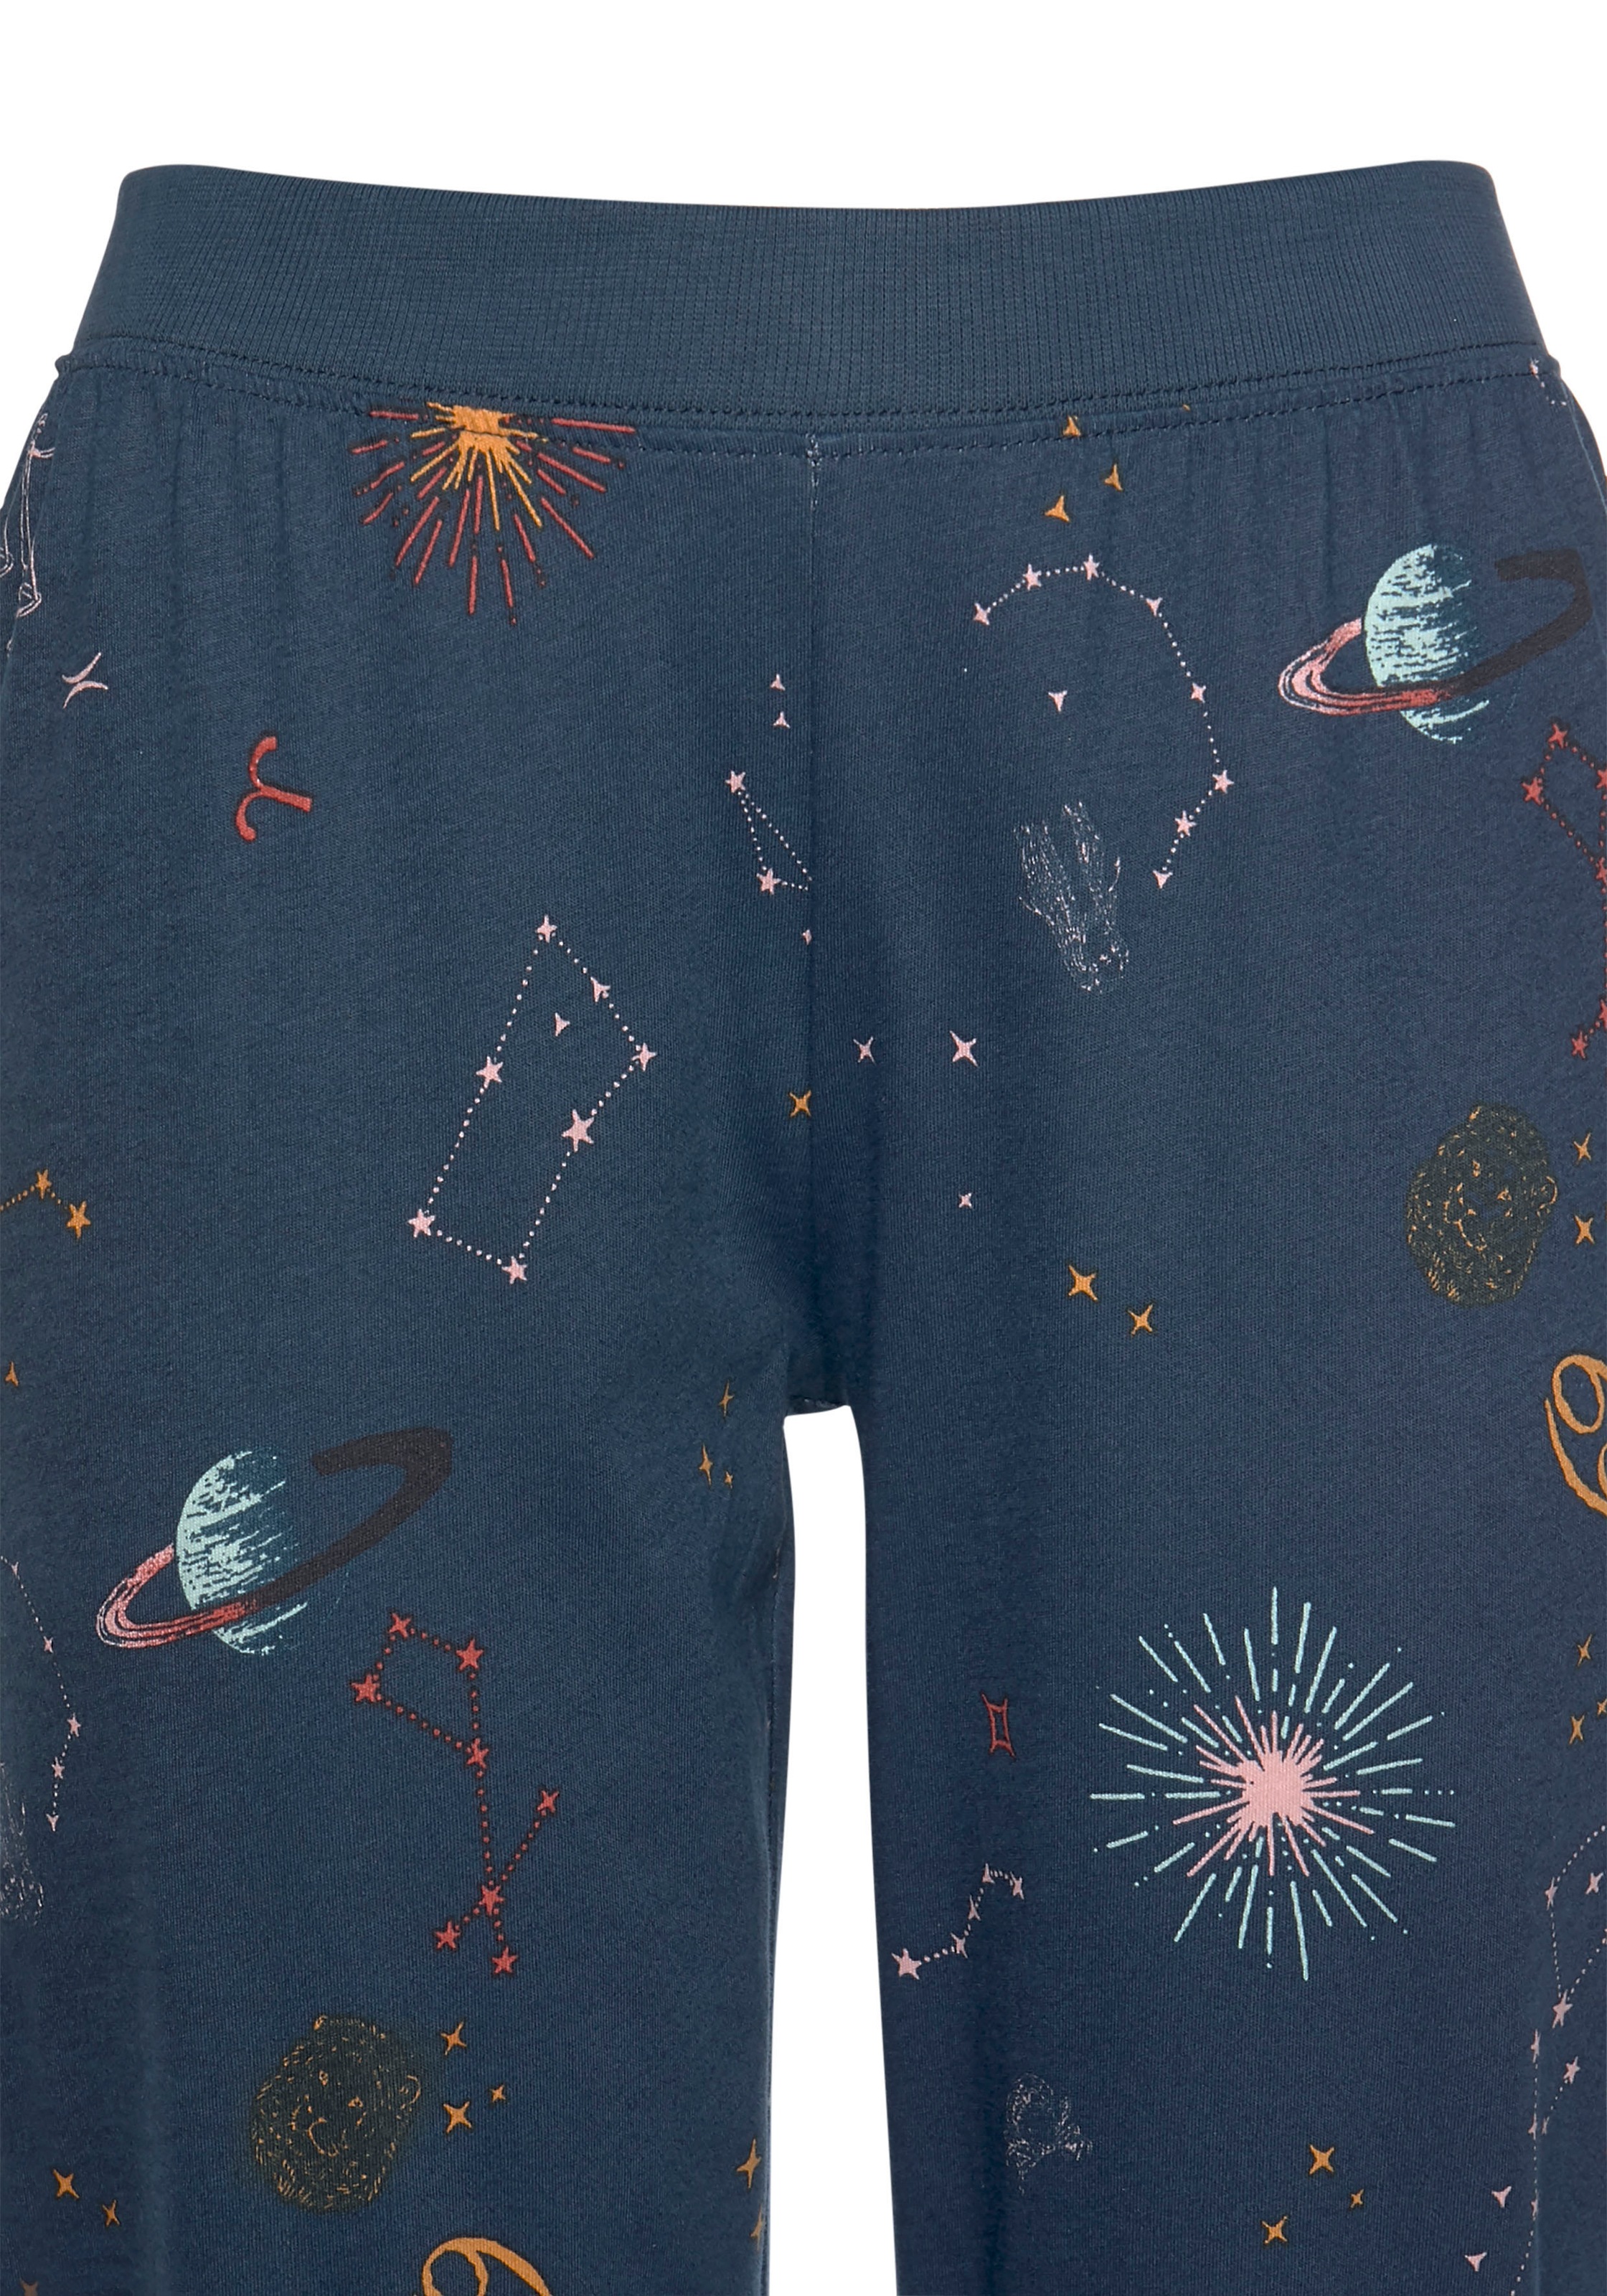 Vivance Dreams Pyjama, (2 tlg., 1 Stück), mit Galaxy-Print » LASCANA |  Bademode, Unterwäsche & Lingerie online kaufen | Shortys